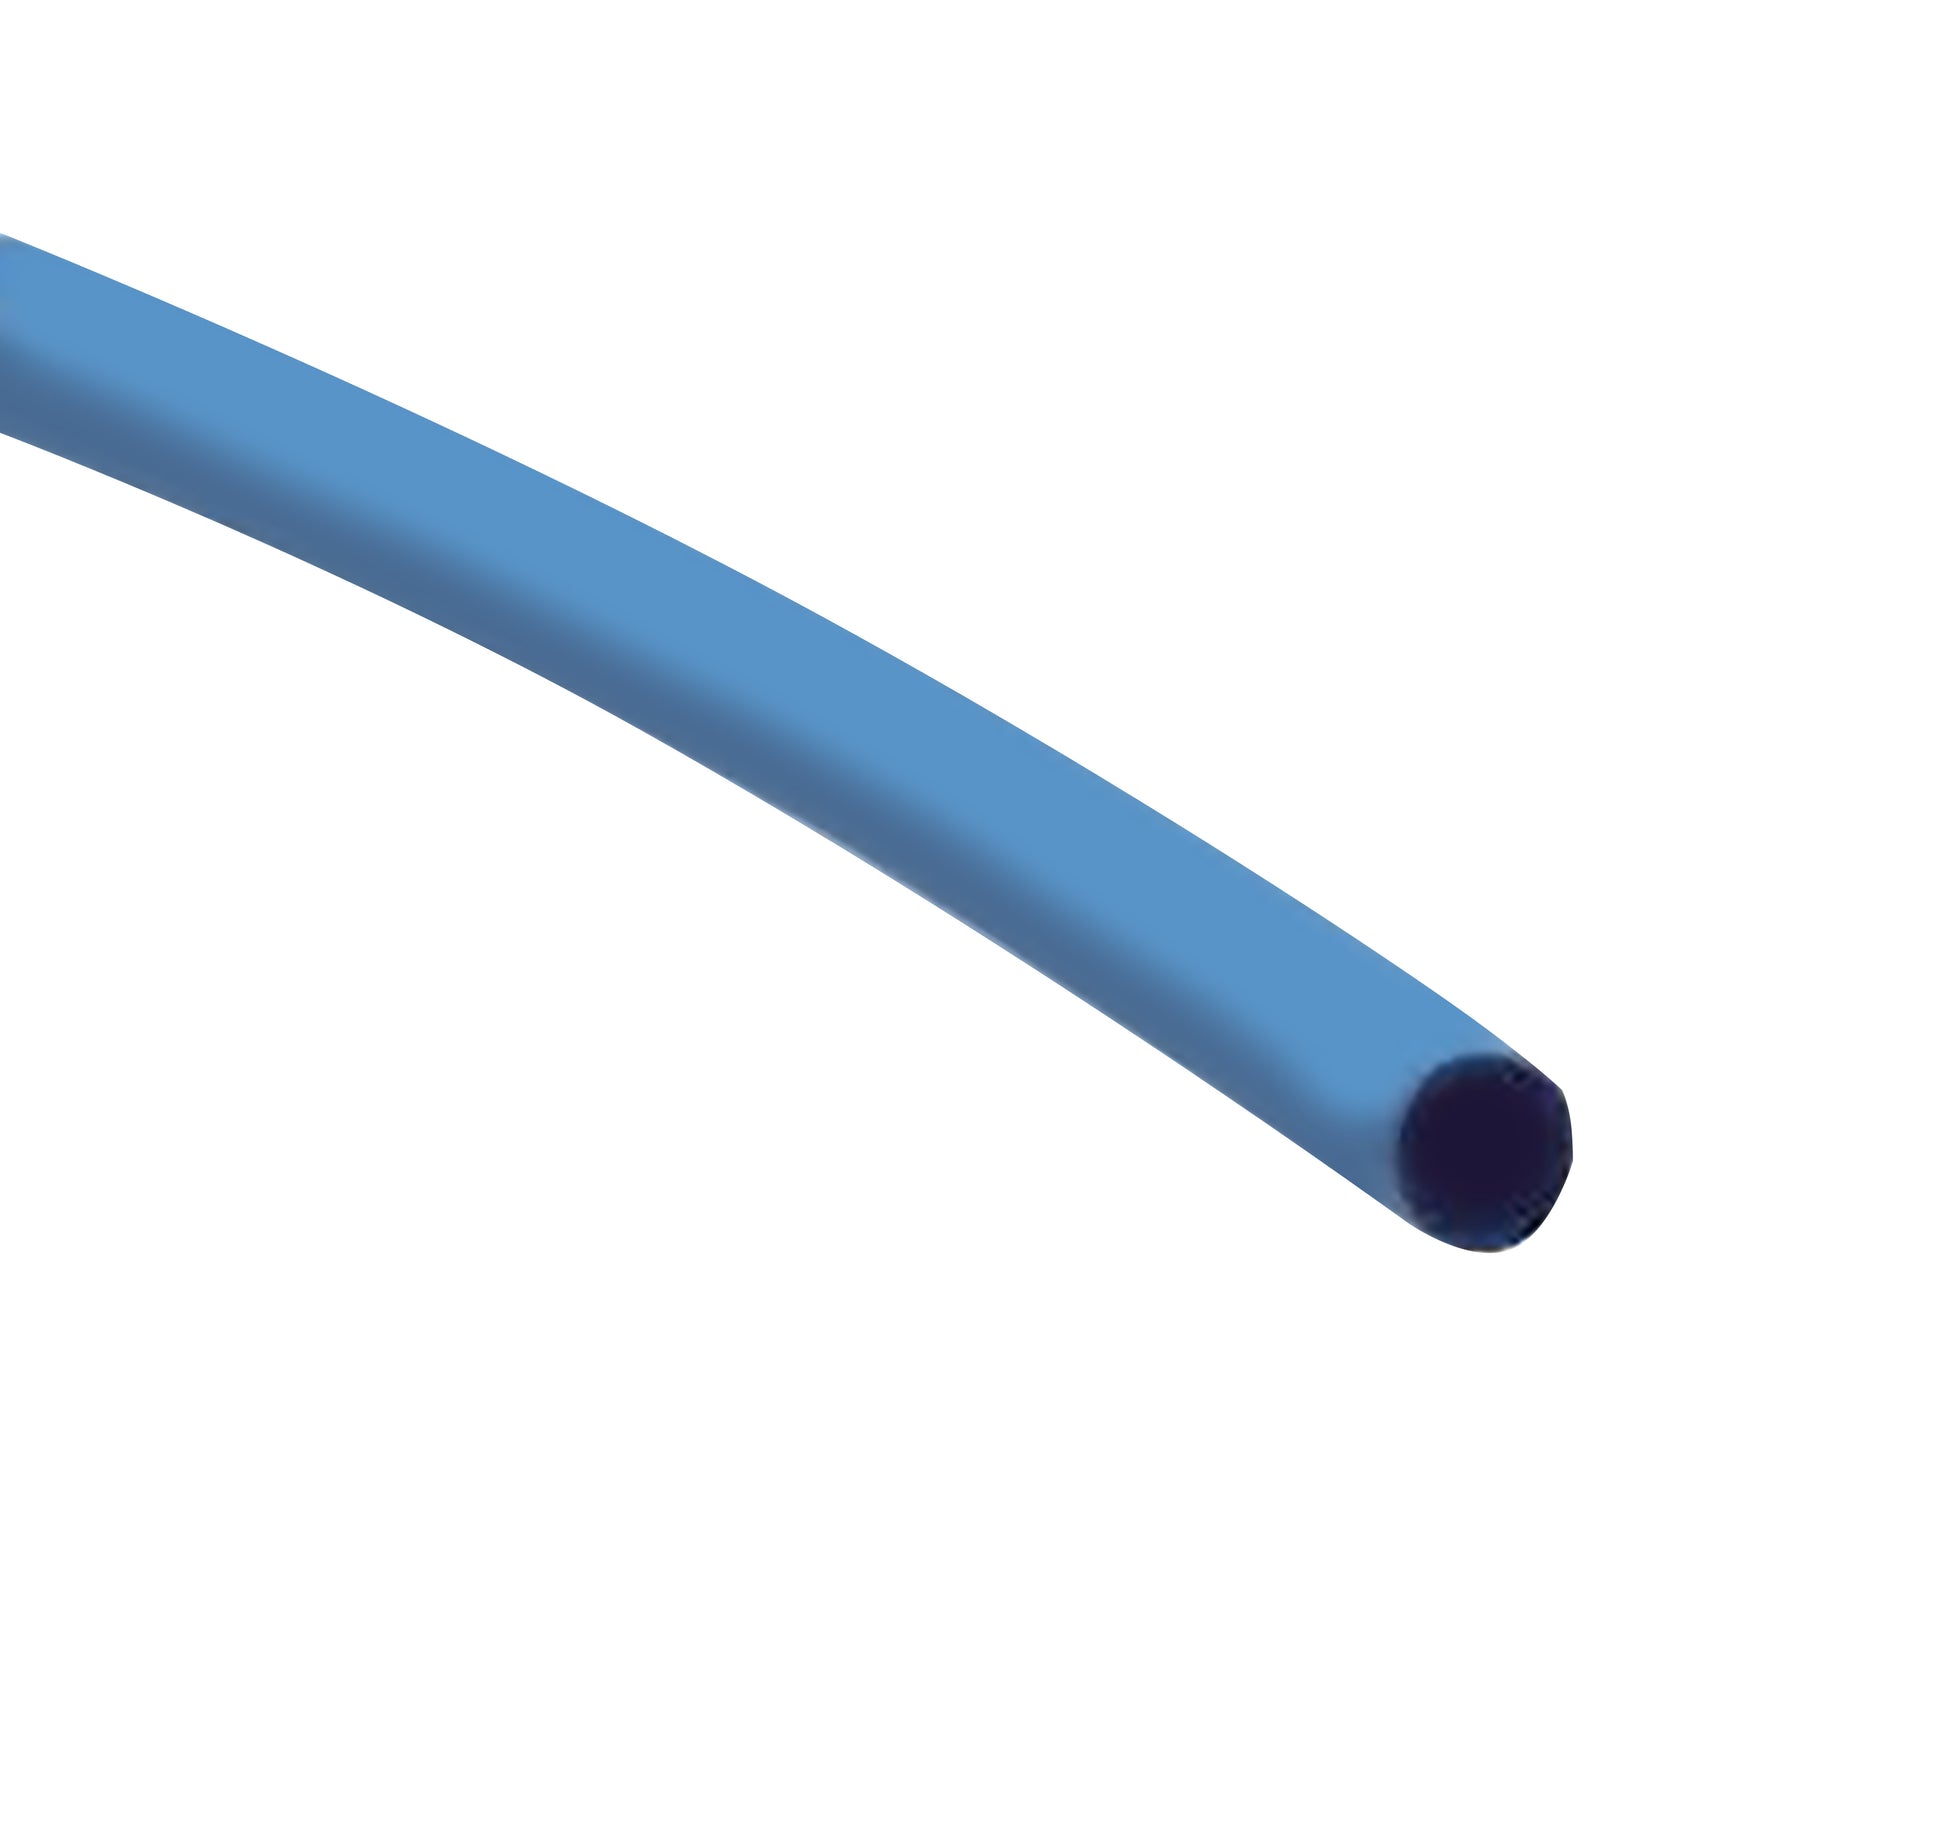 Flexible Thin Single Wall Non-Adhesive Heat Shrink Tubing 2:1 Blue 3/8" ID - 100' Ft Spool